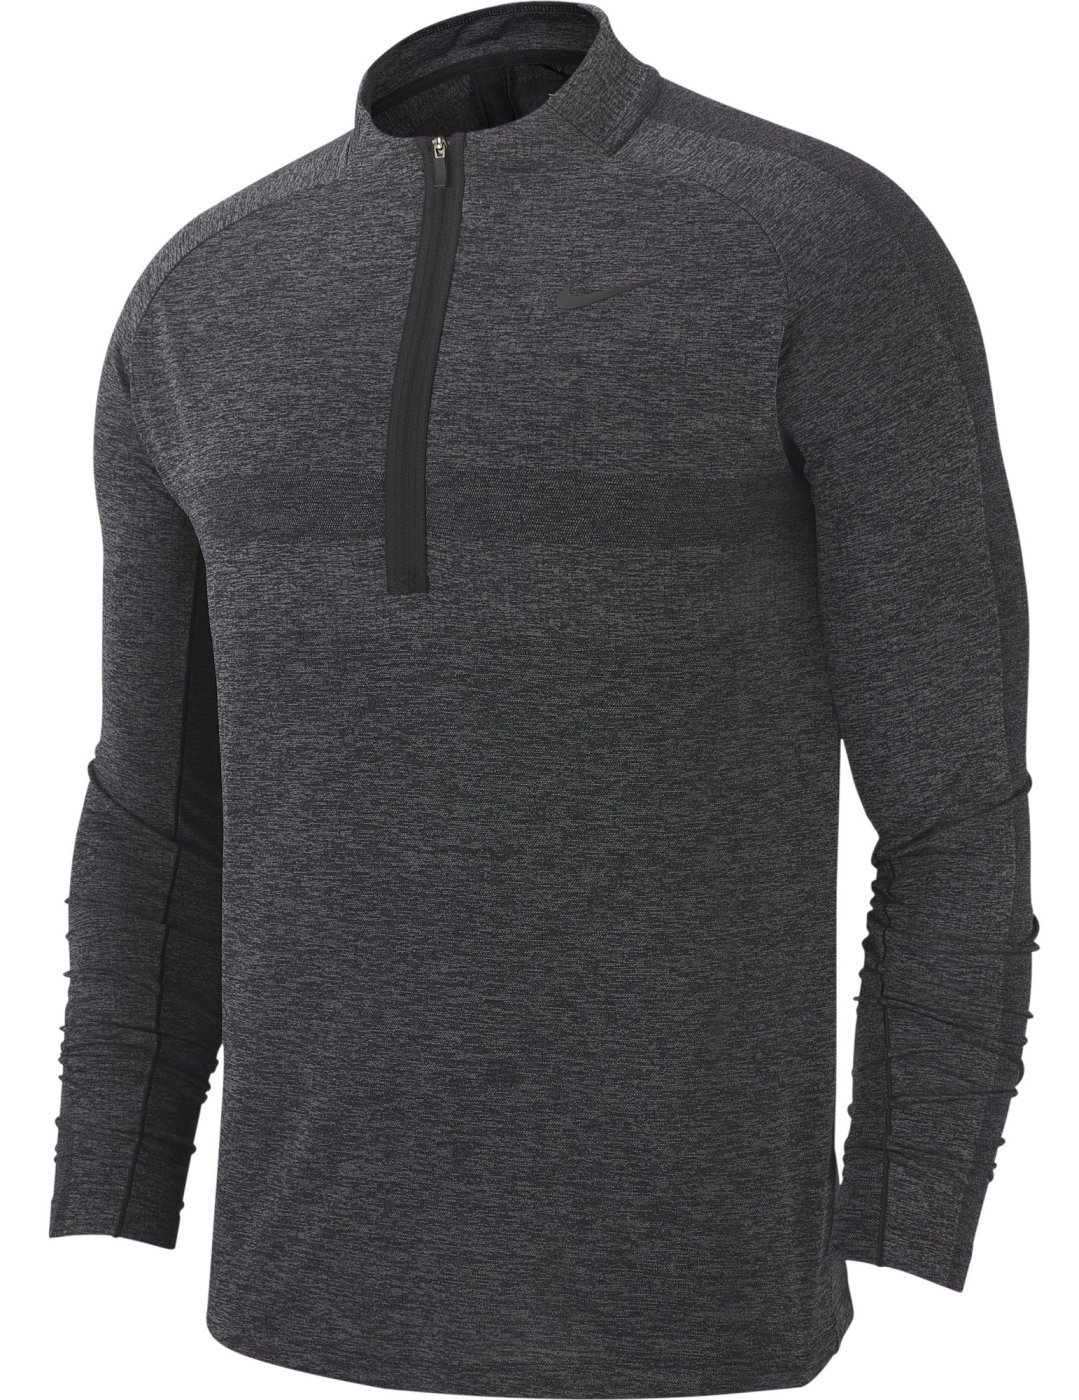 Hoodie/Trui Nike Dry Knit Statement 1/2 Zip Mens Sweater Black/Dark Grey L